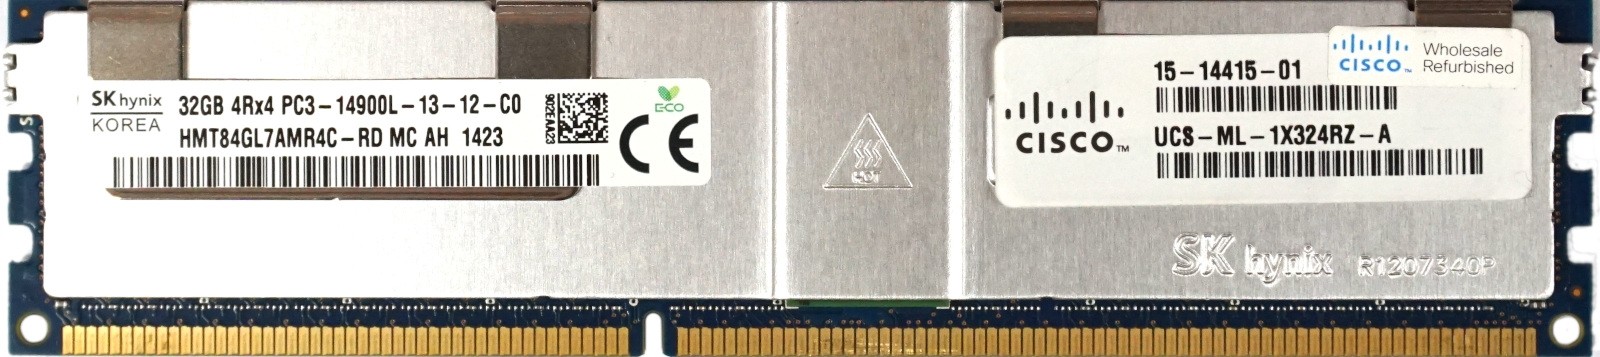 Cisco - 32GB PC3-14900L (DDR3-1866Mhz, 4RX4)